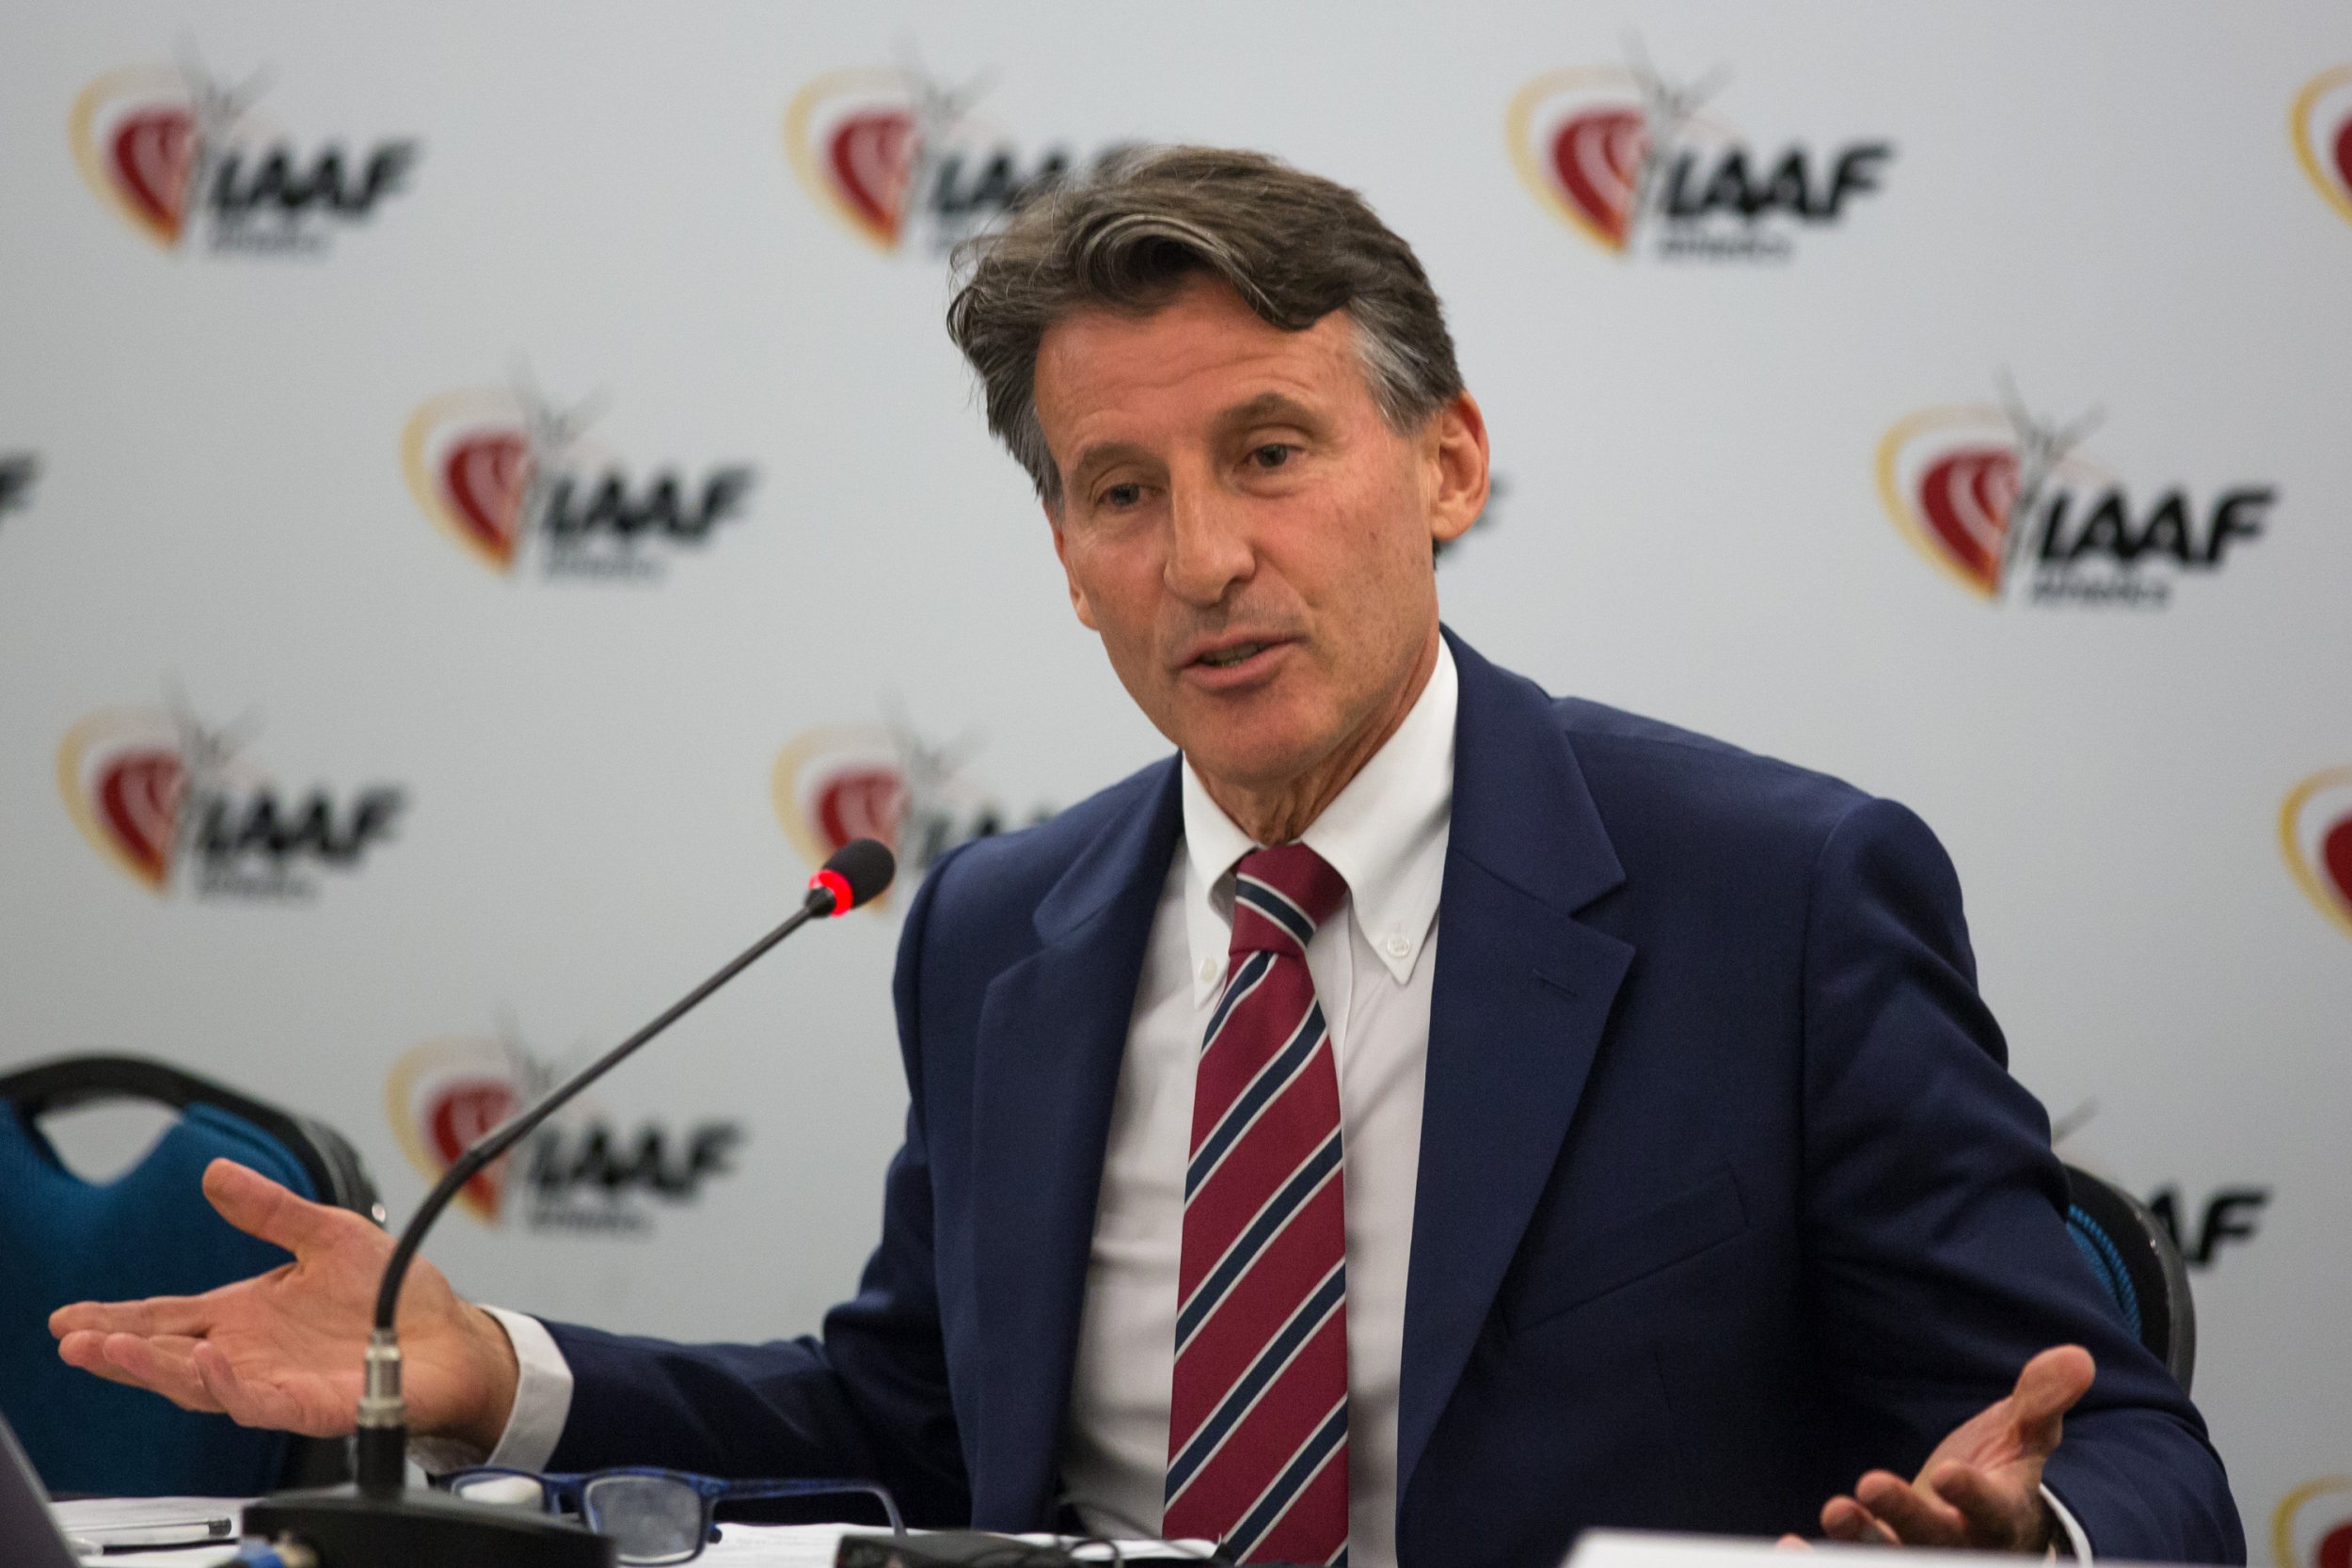 IAAF President Lord Sebastian Coe